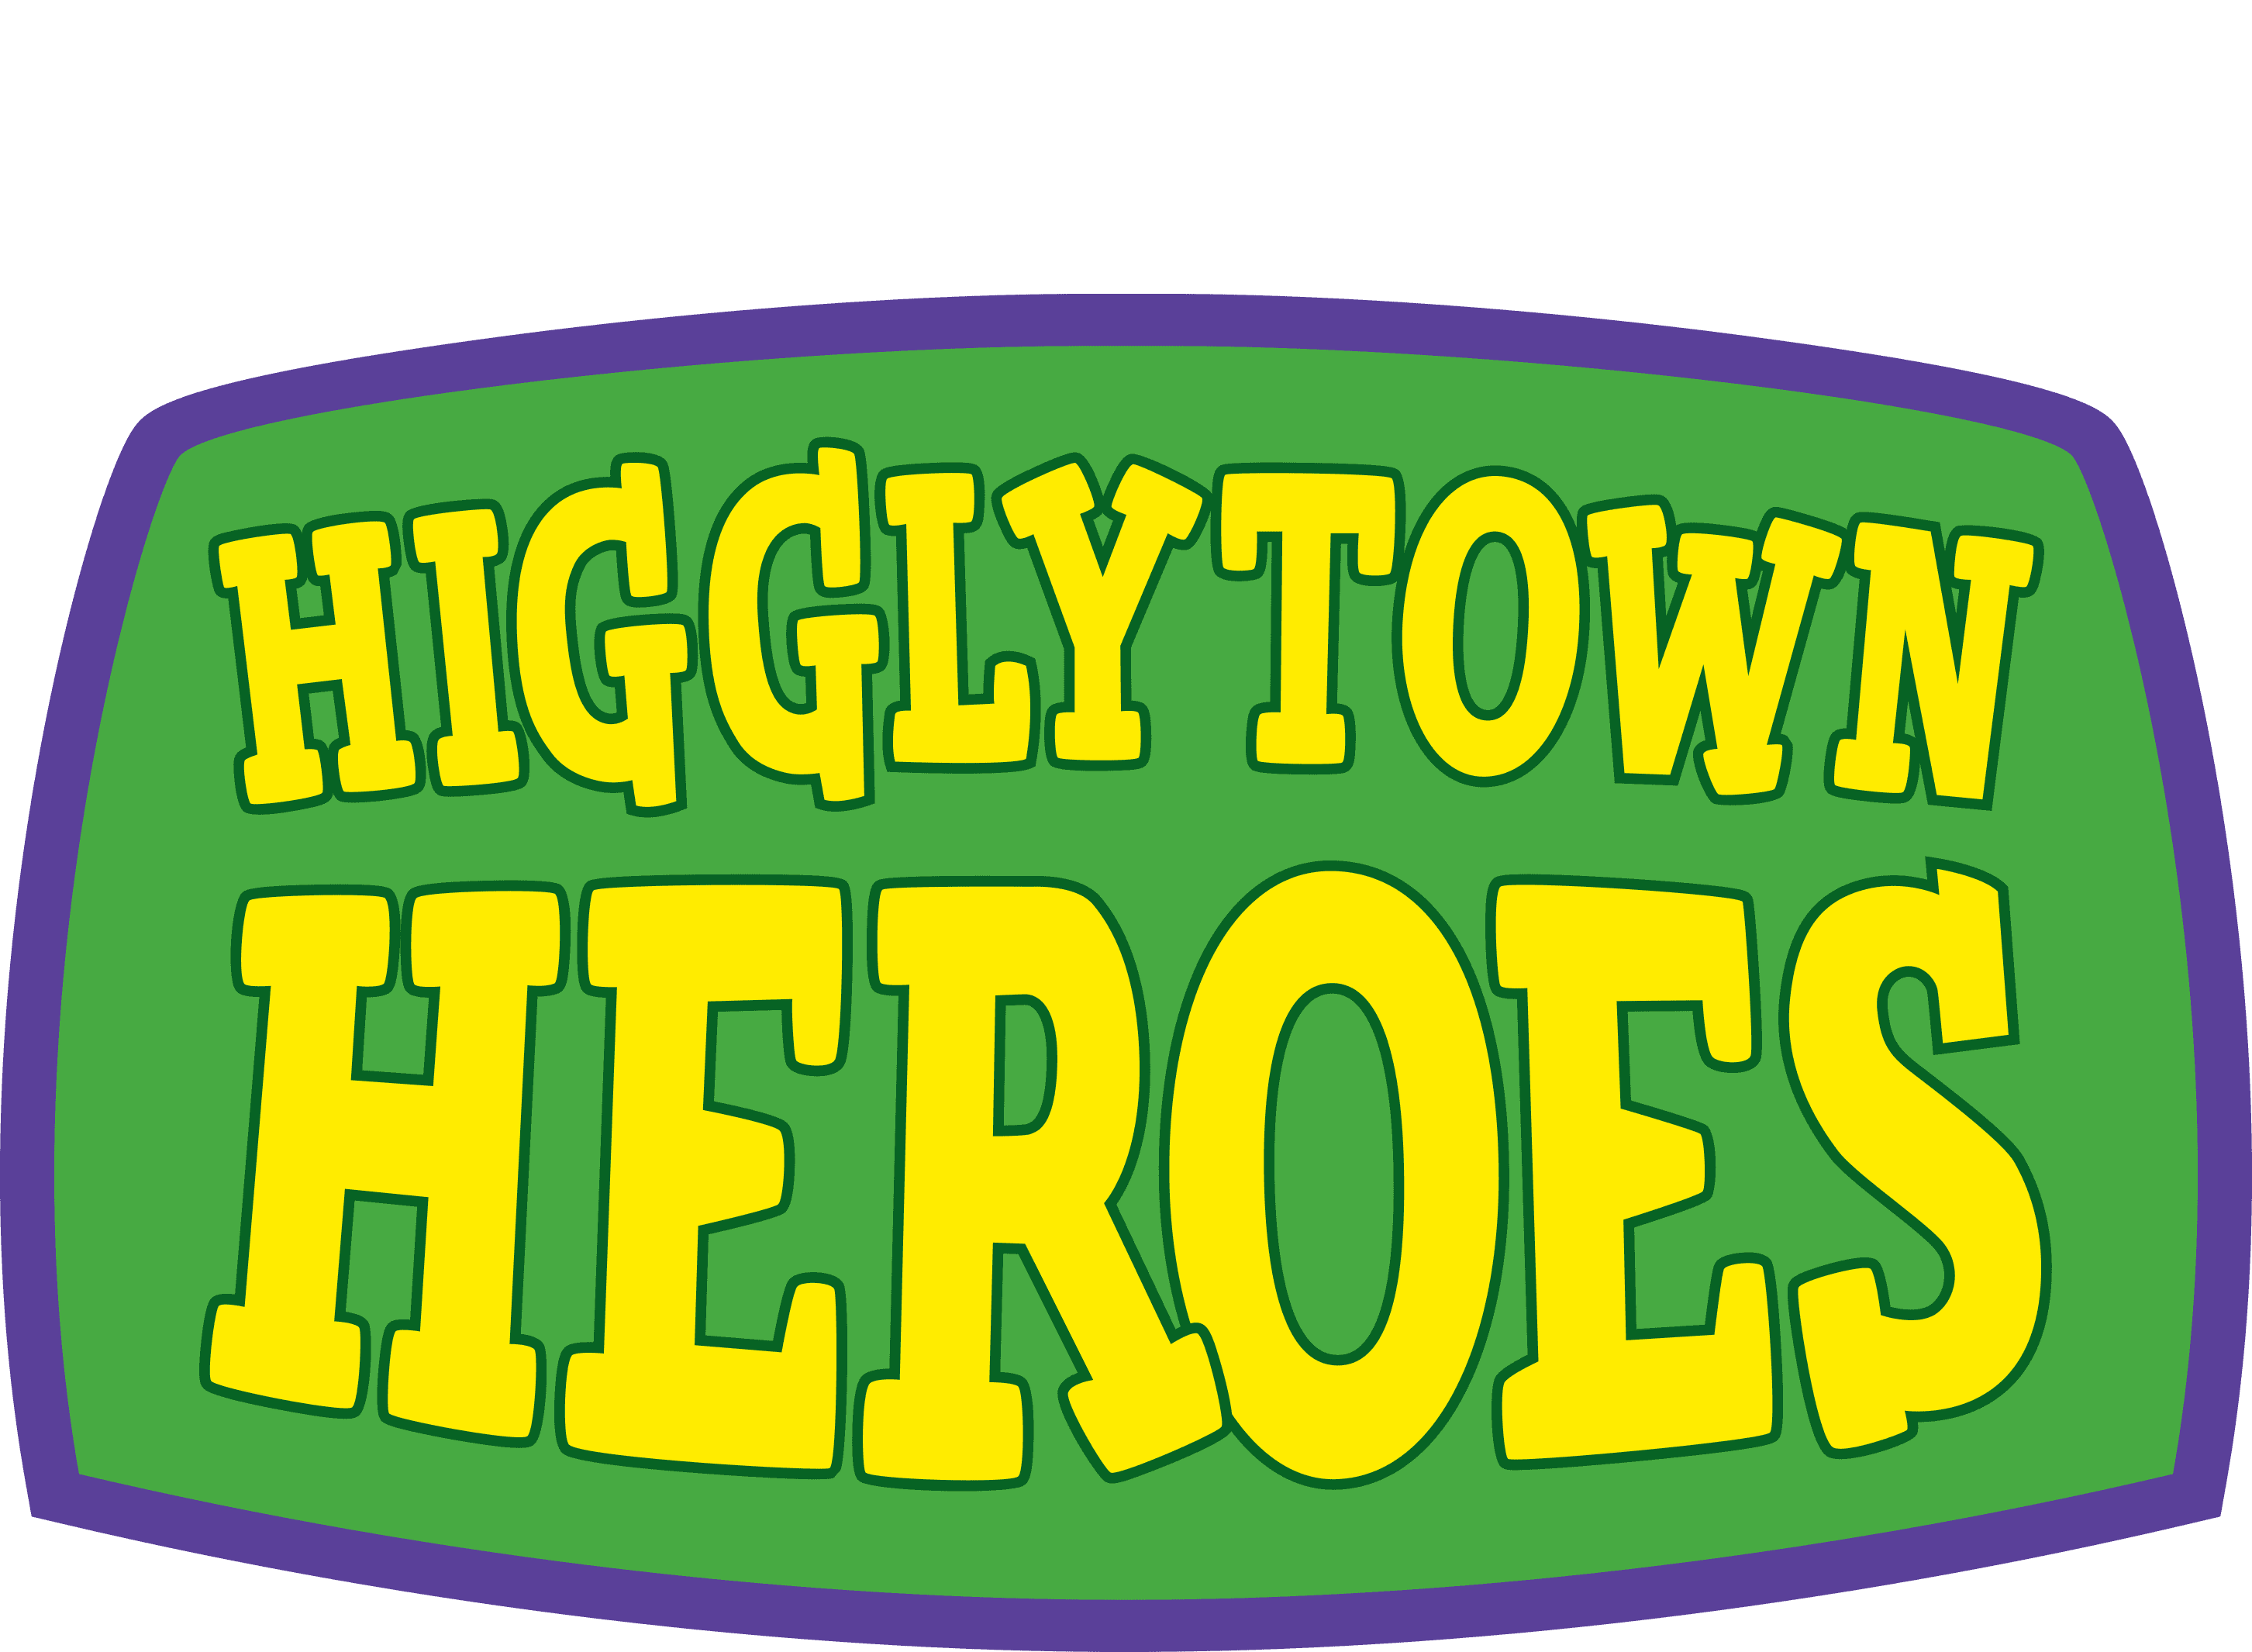 Higglytown Heroes logo